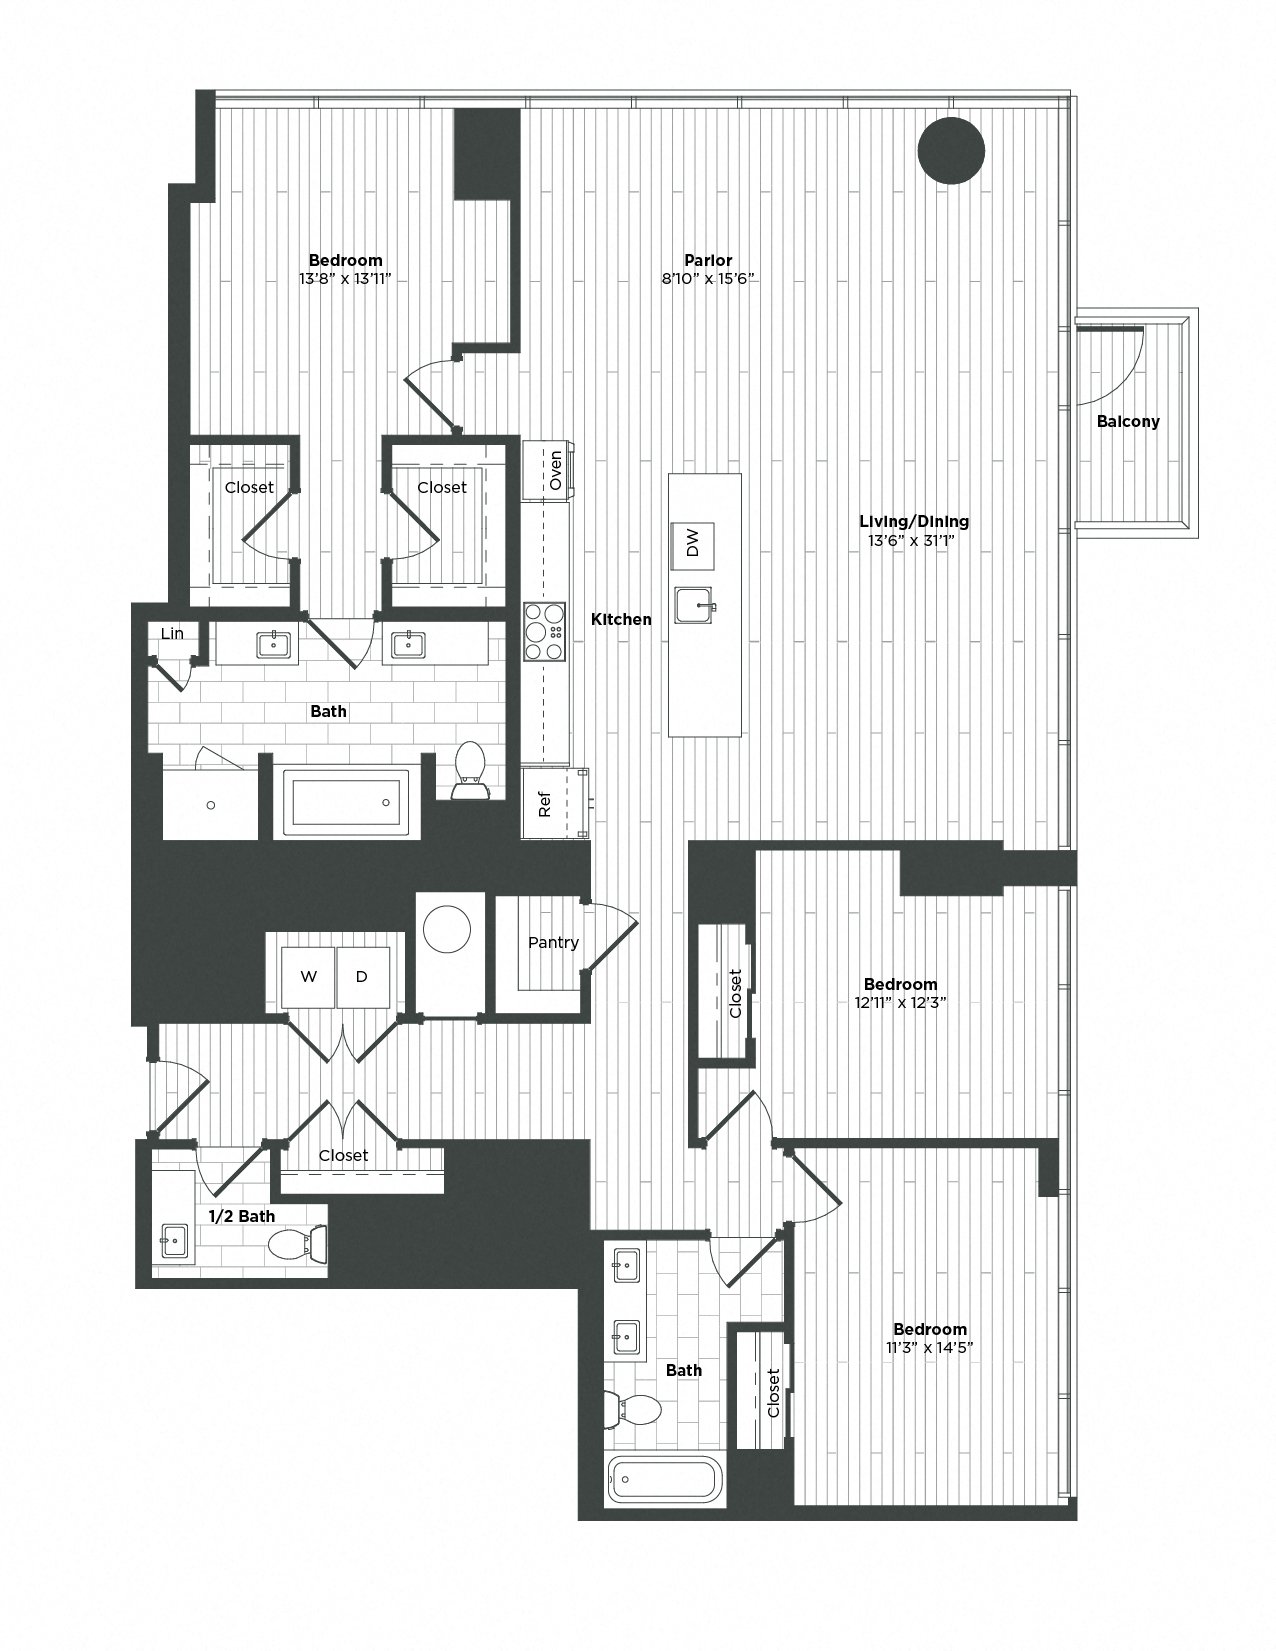 Apartment 3406 floorplan